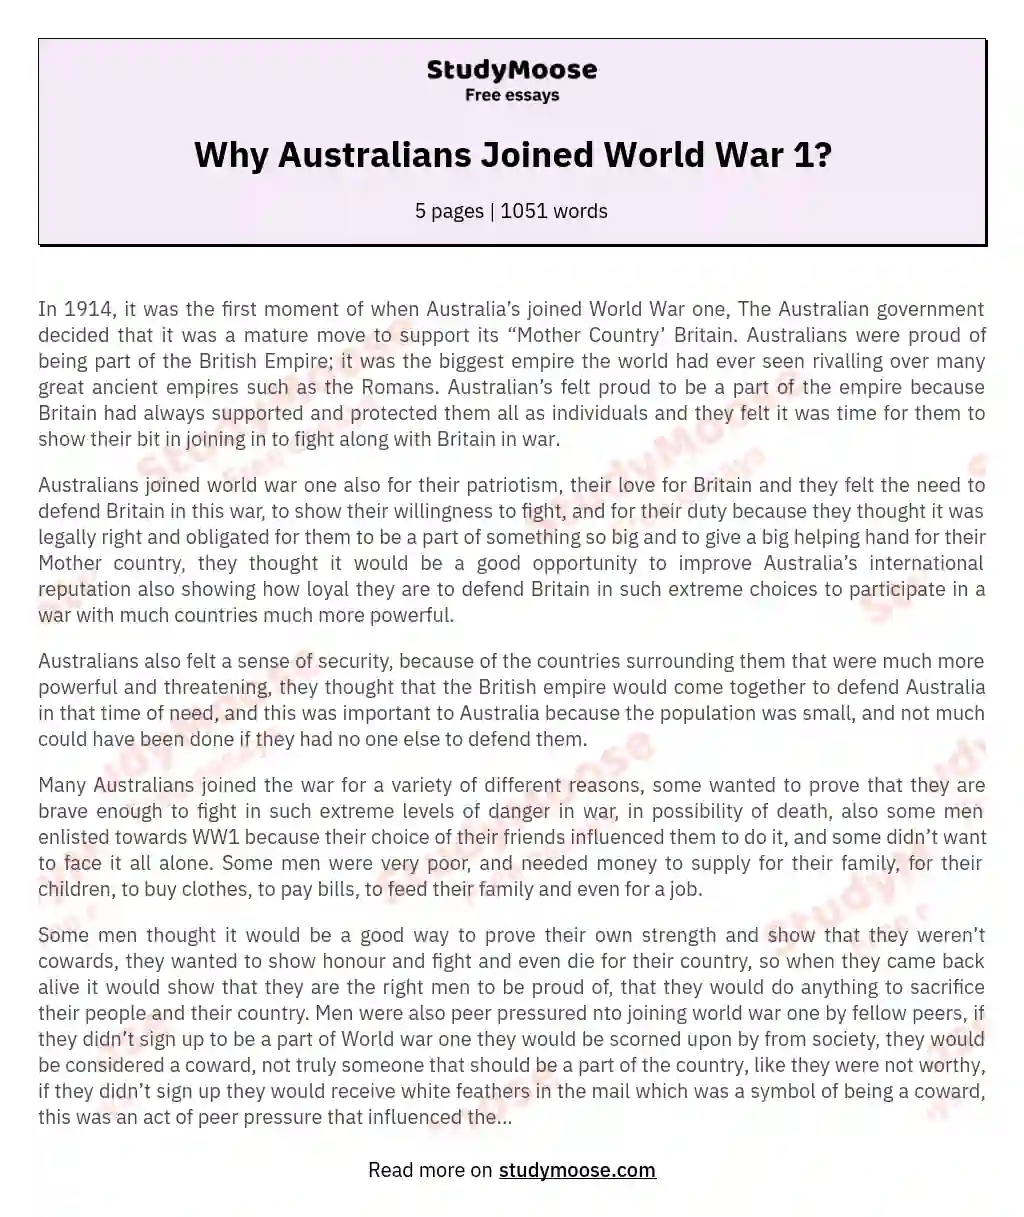 Why Australians Joined World War 1?